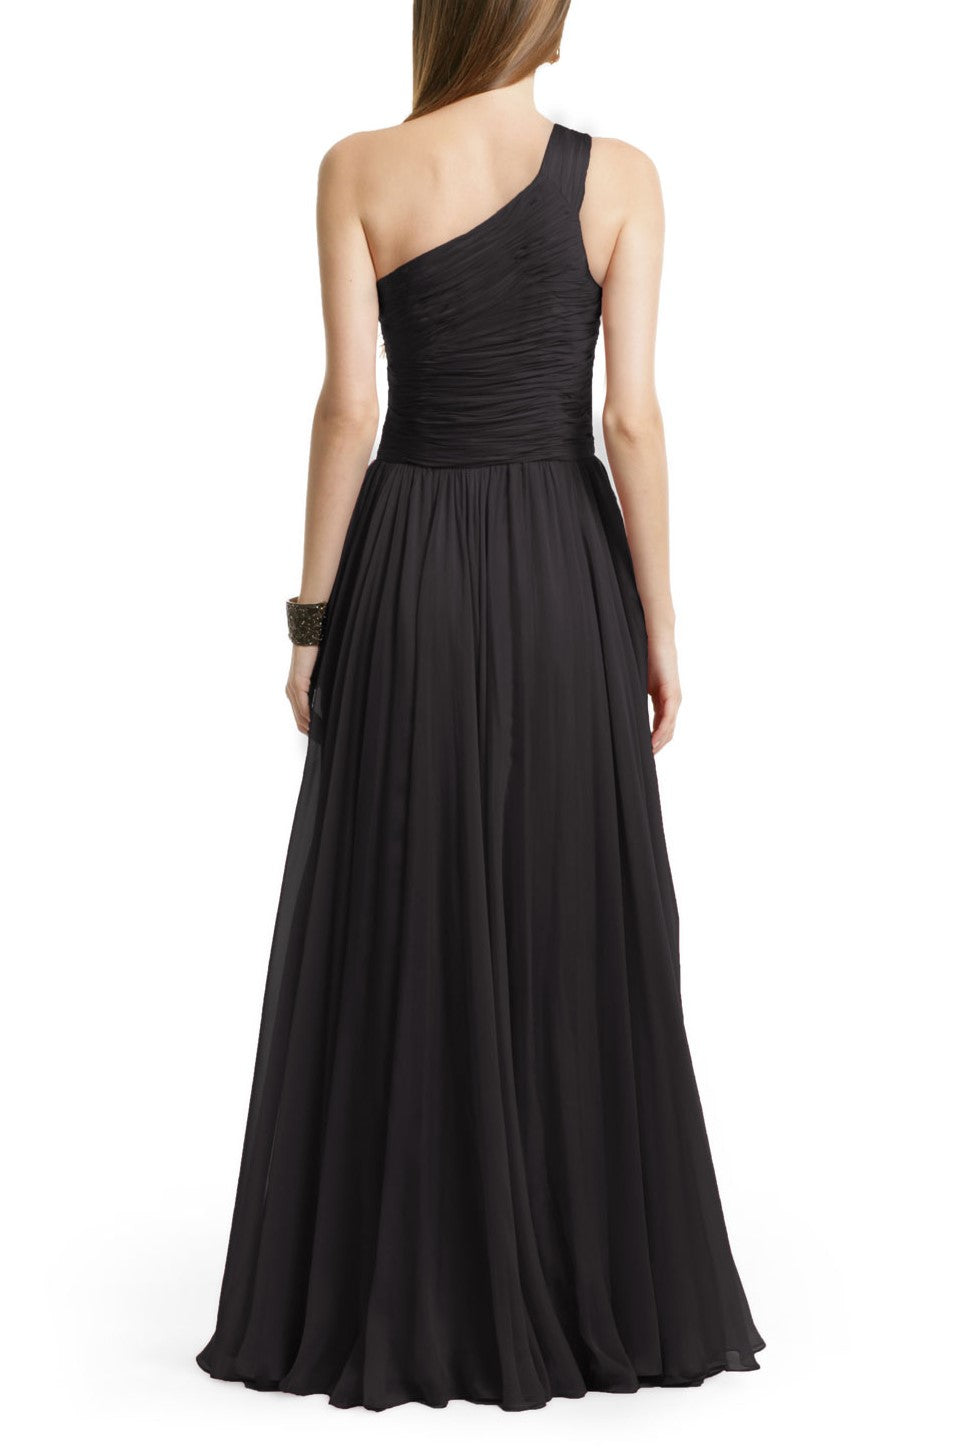 one-shoulder-floor-length-black-prom-dress-chiffon-skirt-1